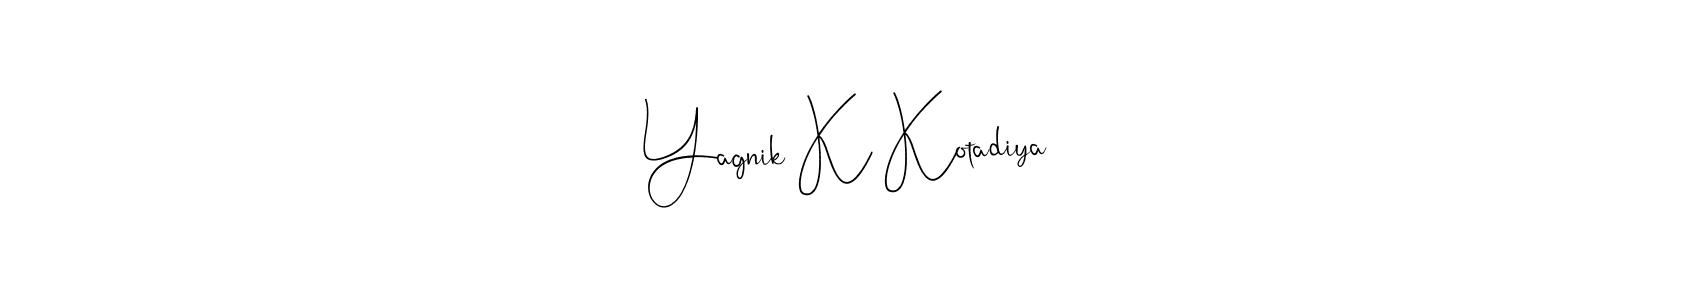 Make a beautiful signature design for name Yagnik K Kotadiya. Use this online signature maker to create a handwritten signature for free. Yagnik K Kotadiya signature style 4 images and pictures png